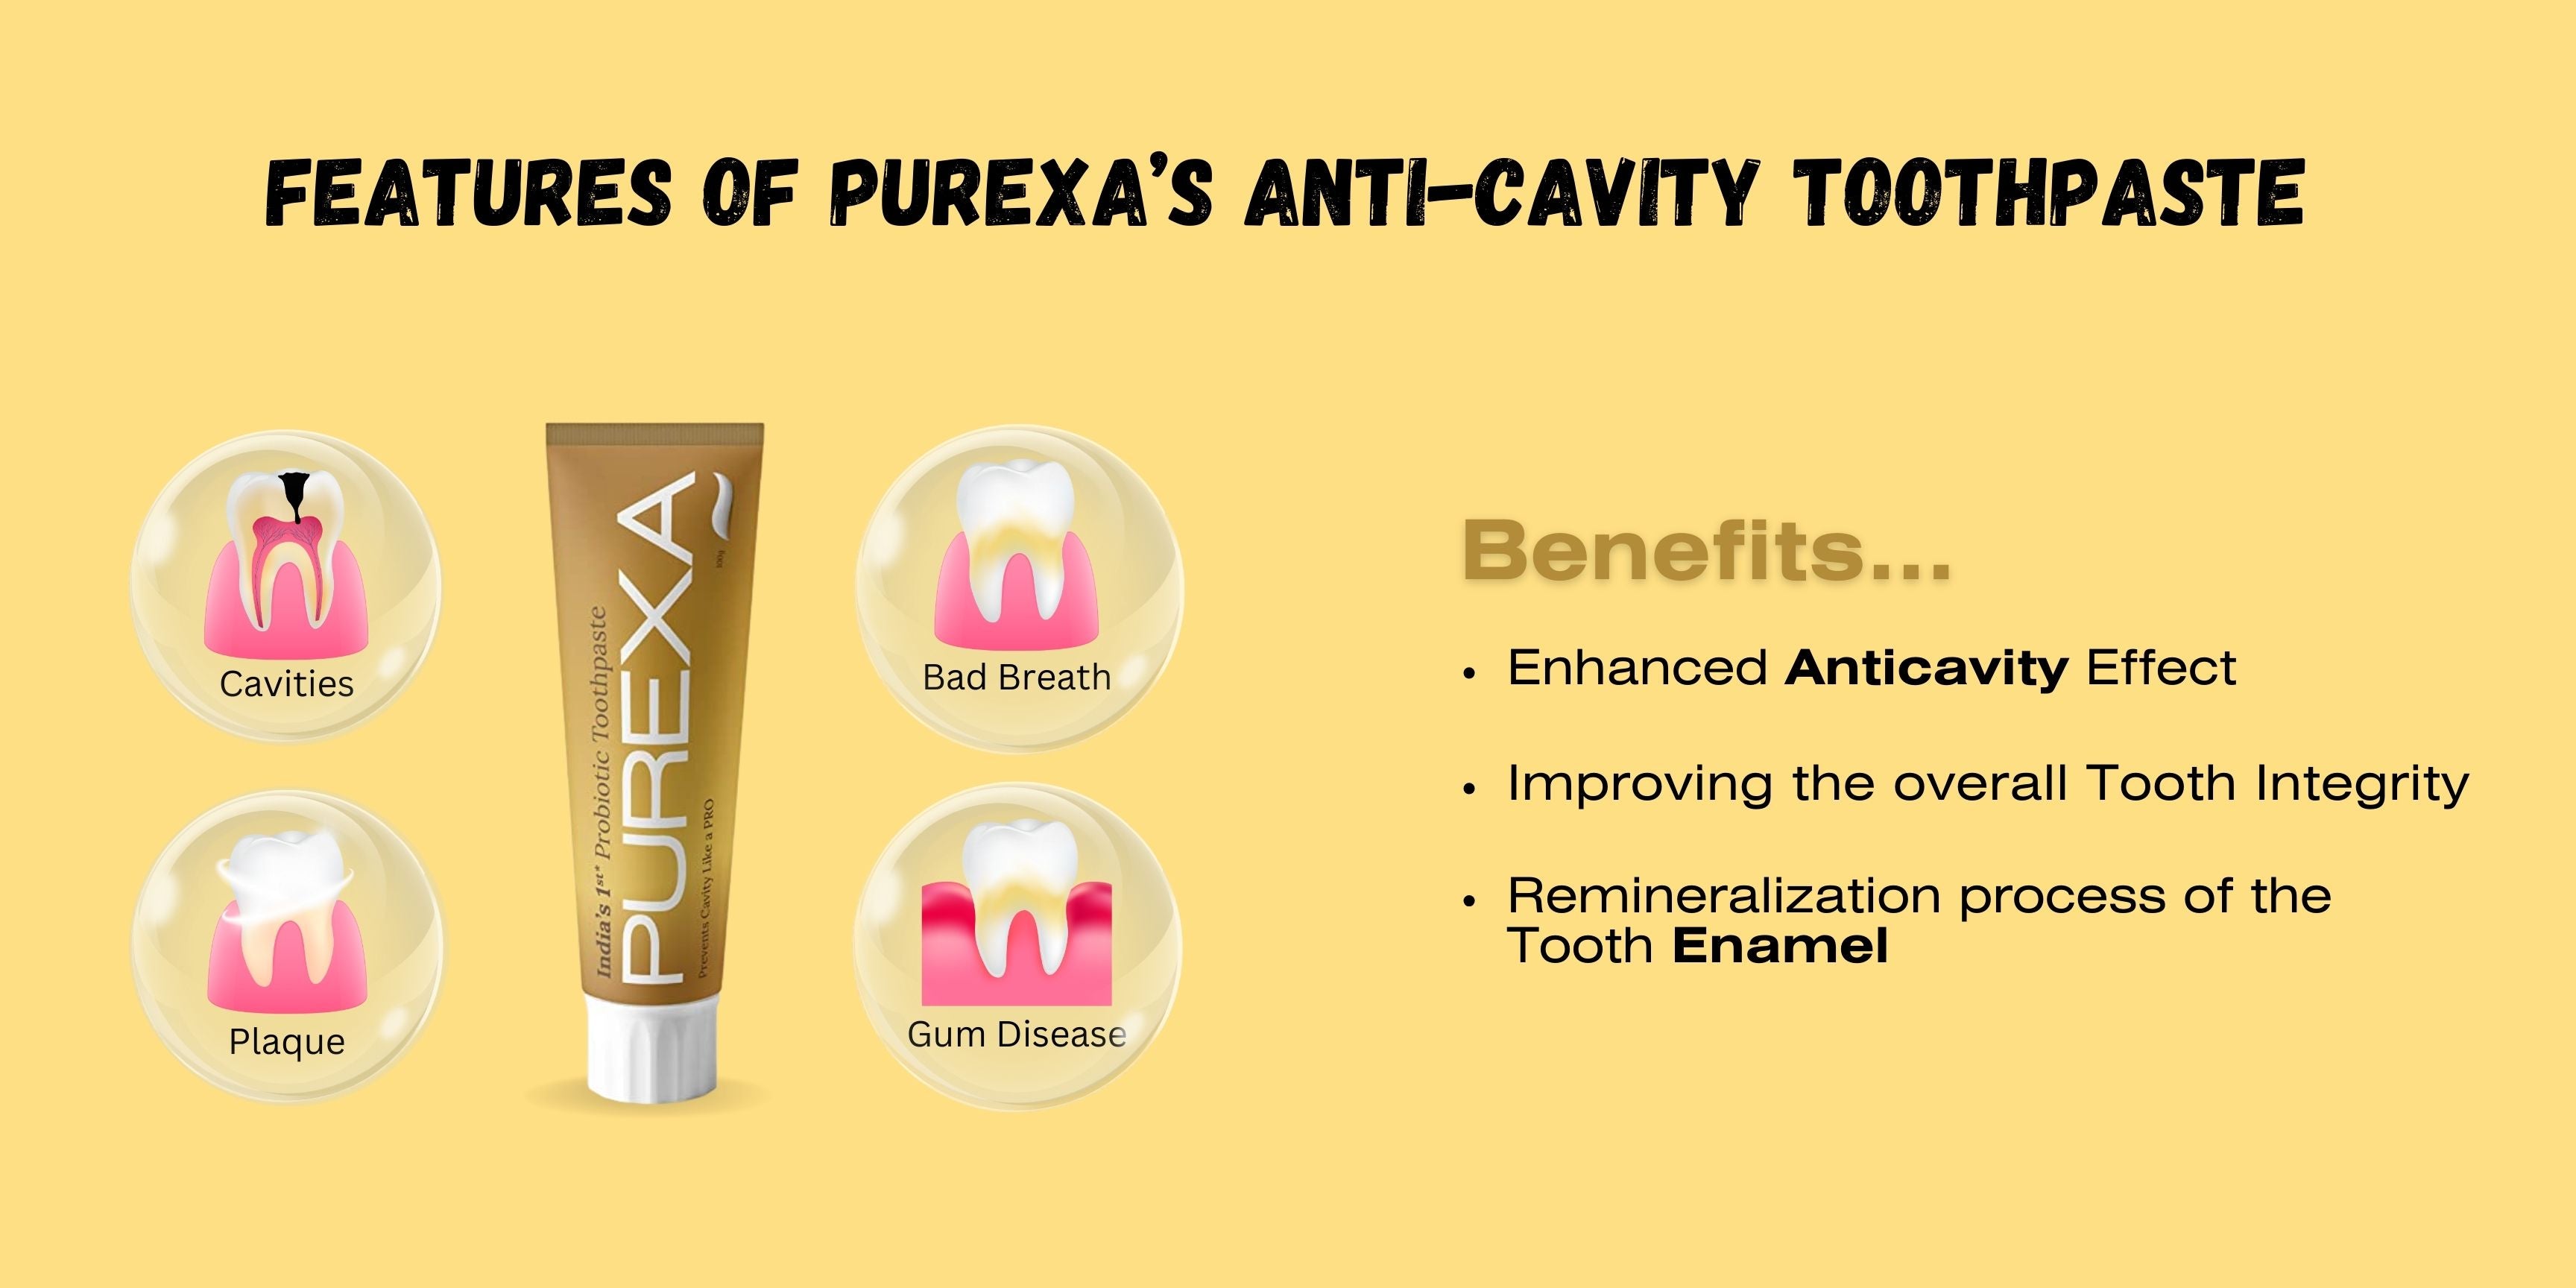 PUREXA’s anti-cavity toothpaste